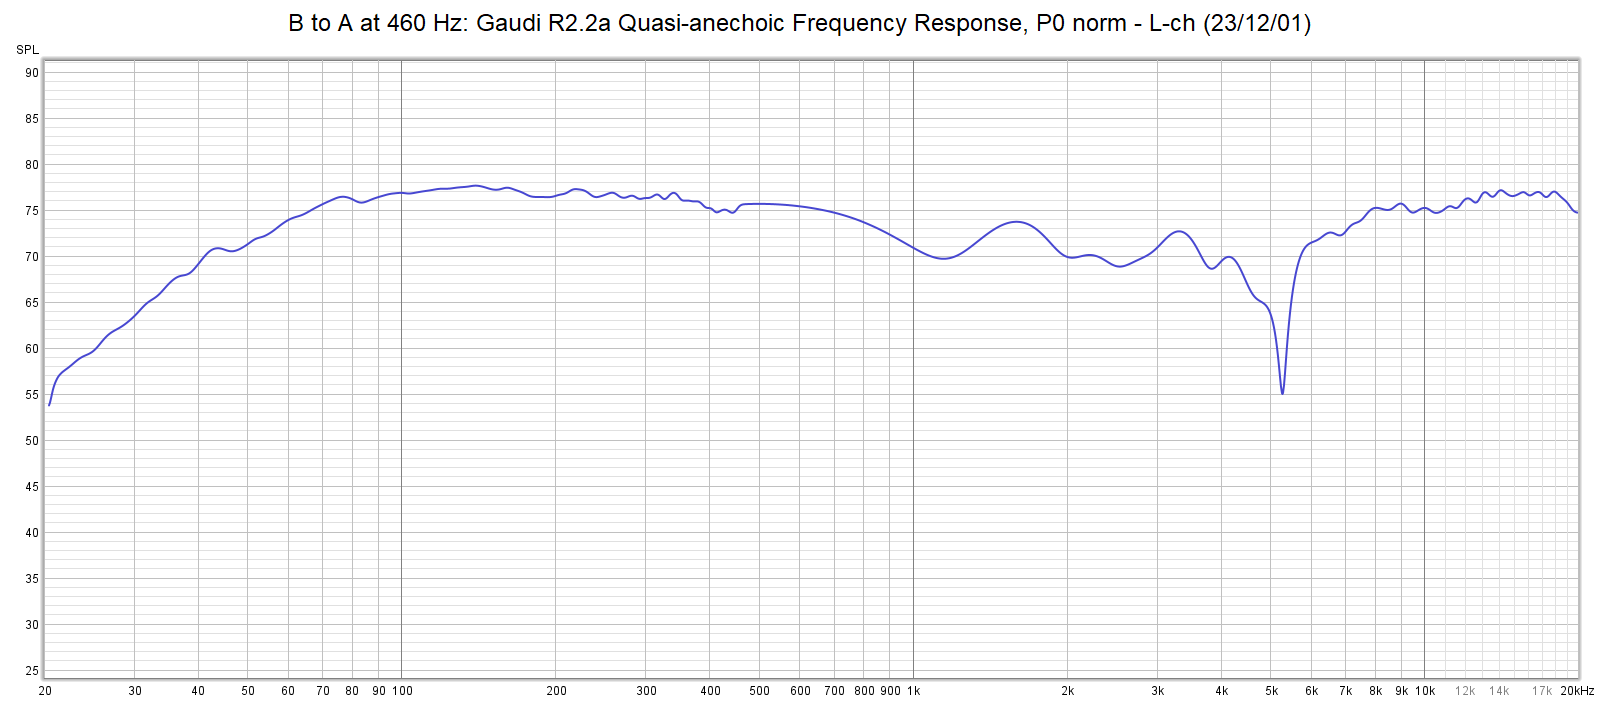 Quasi-anechoic frequency response of Gaudi R2.2, P0 normal